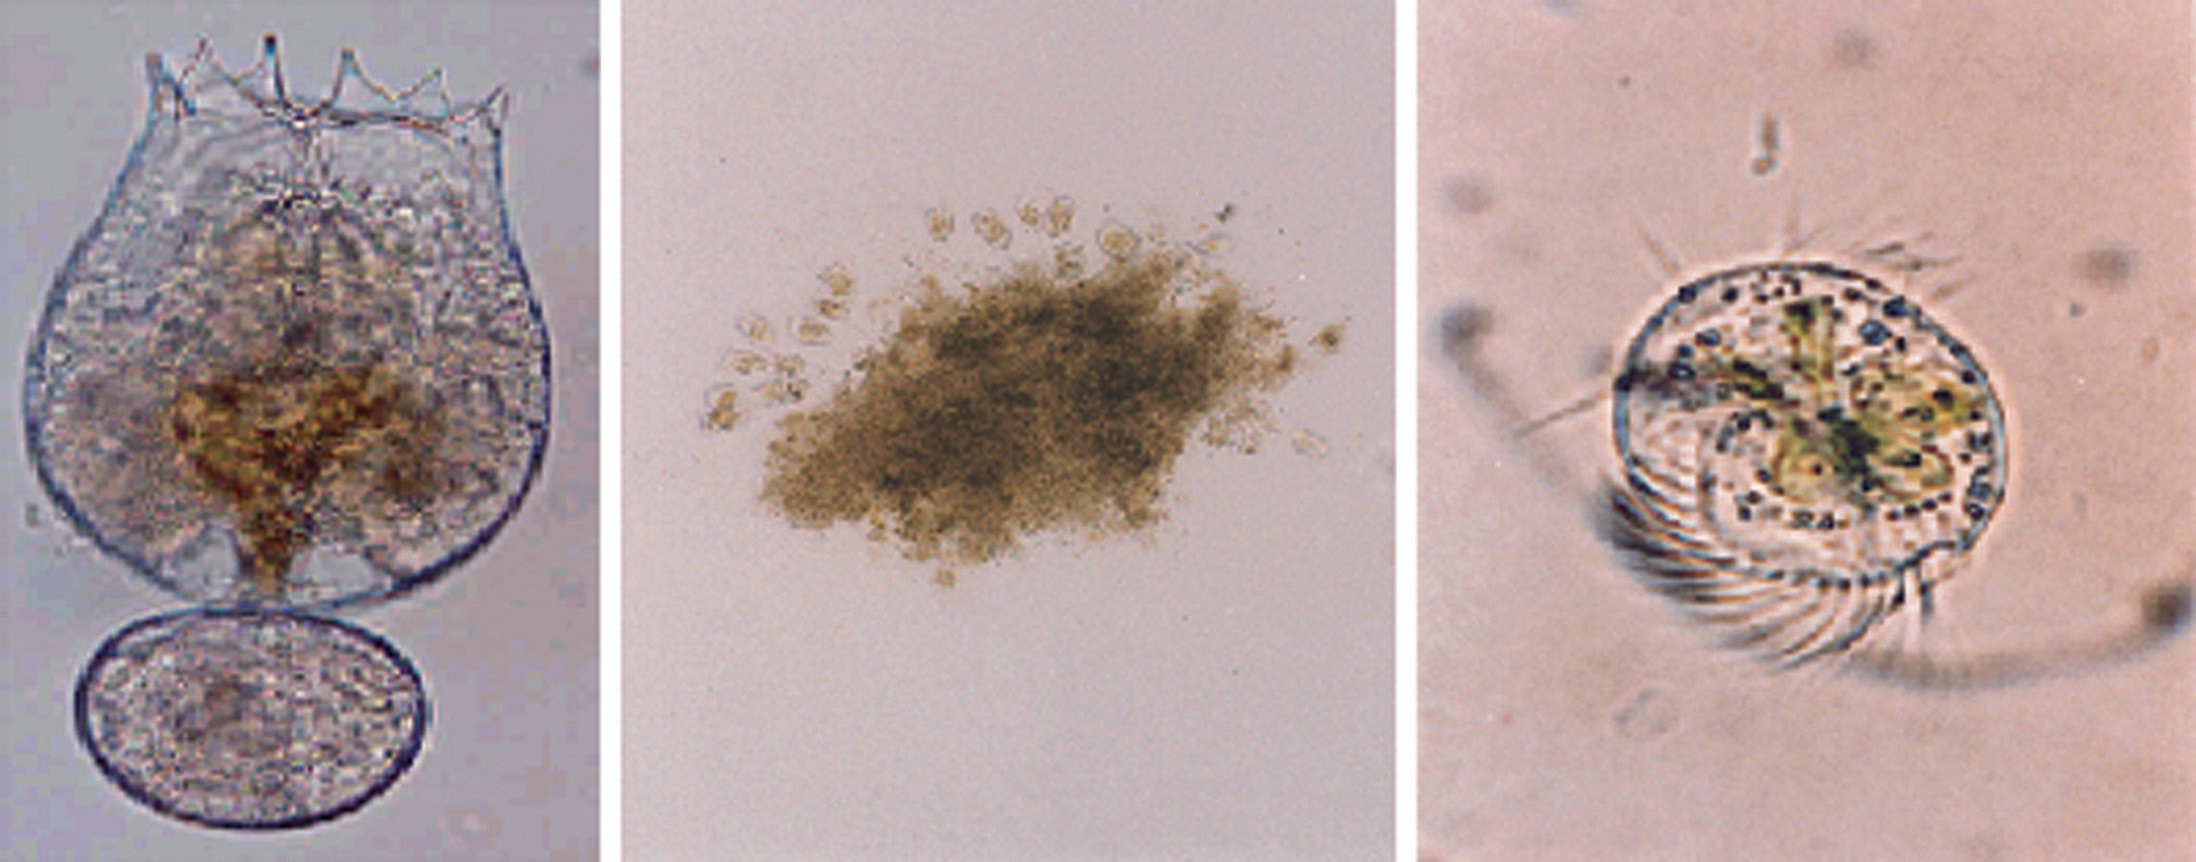 The experimental organisms of rotifer, Brachionus rotundiformis (A; 190 ± 20 μm) and two ciliates, Vorticella sp. (B; 70 ± 13 μm) and Euplotes sp. (C; 82 ± 16 μm).